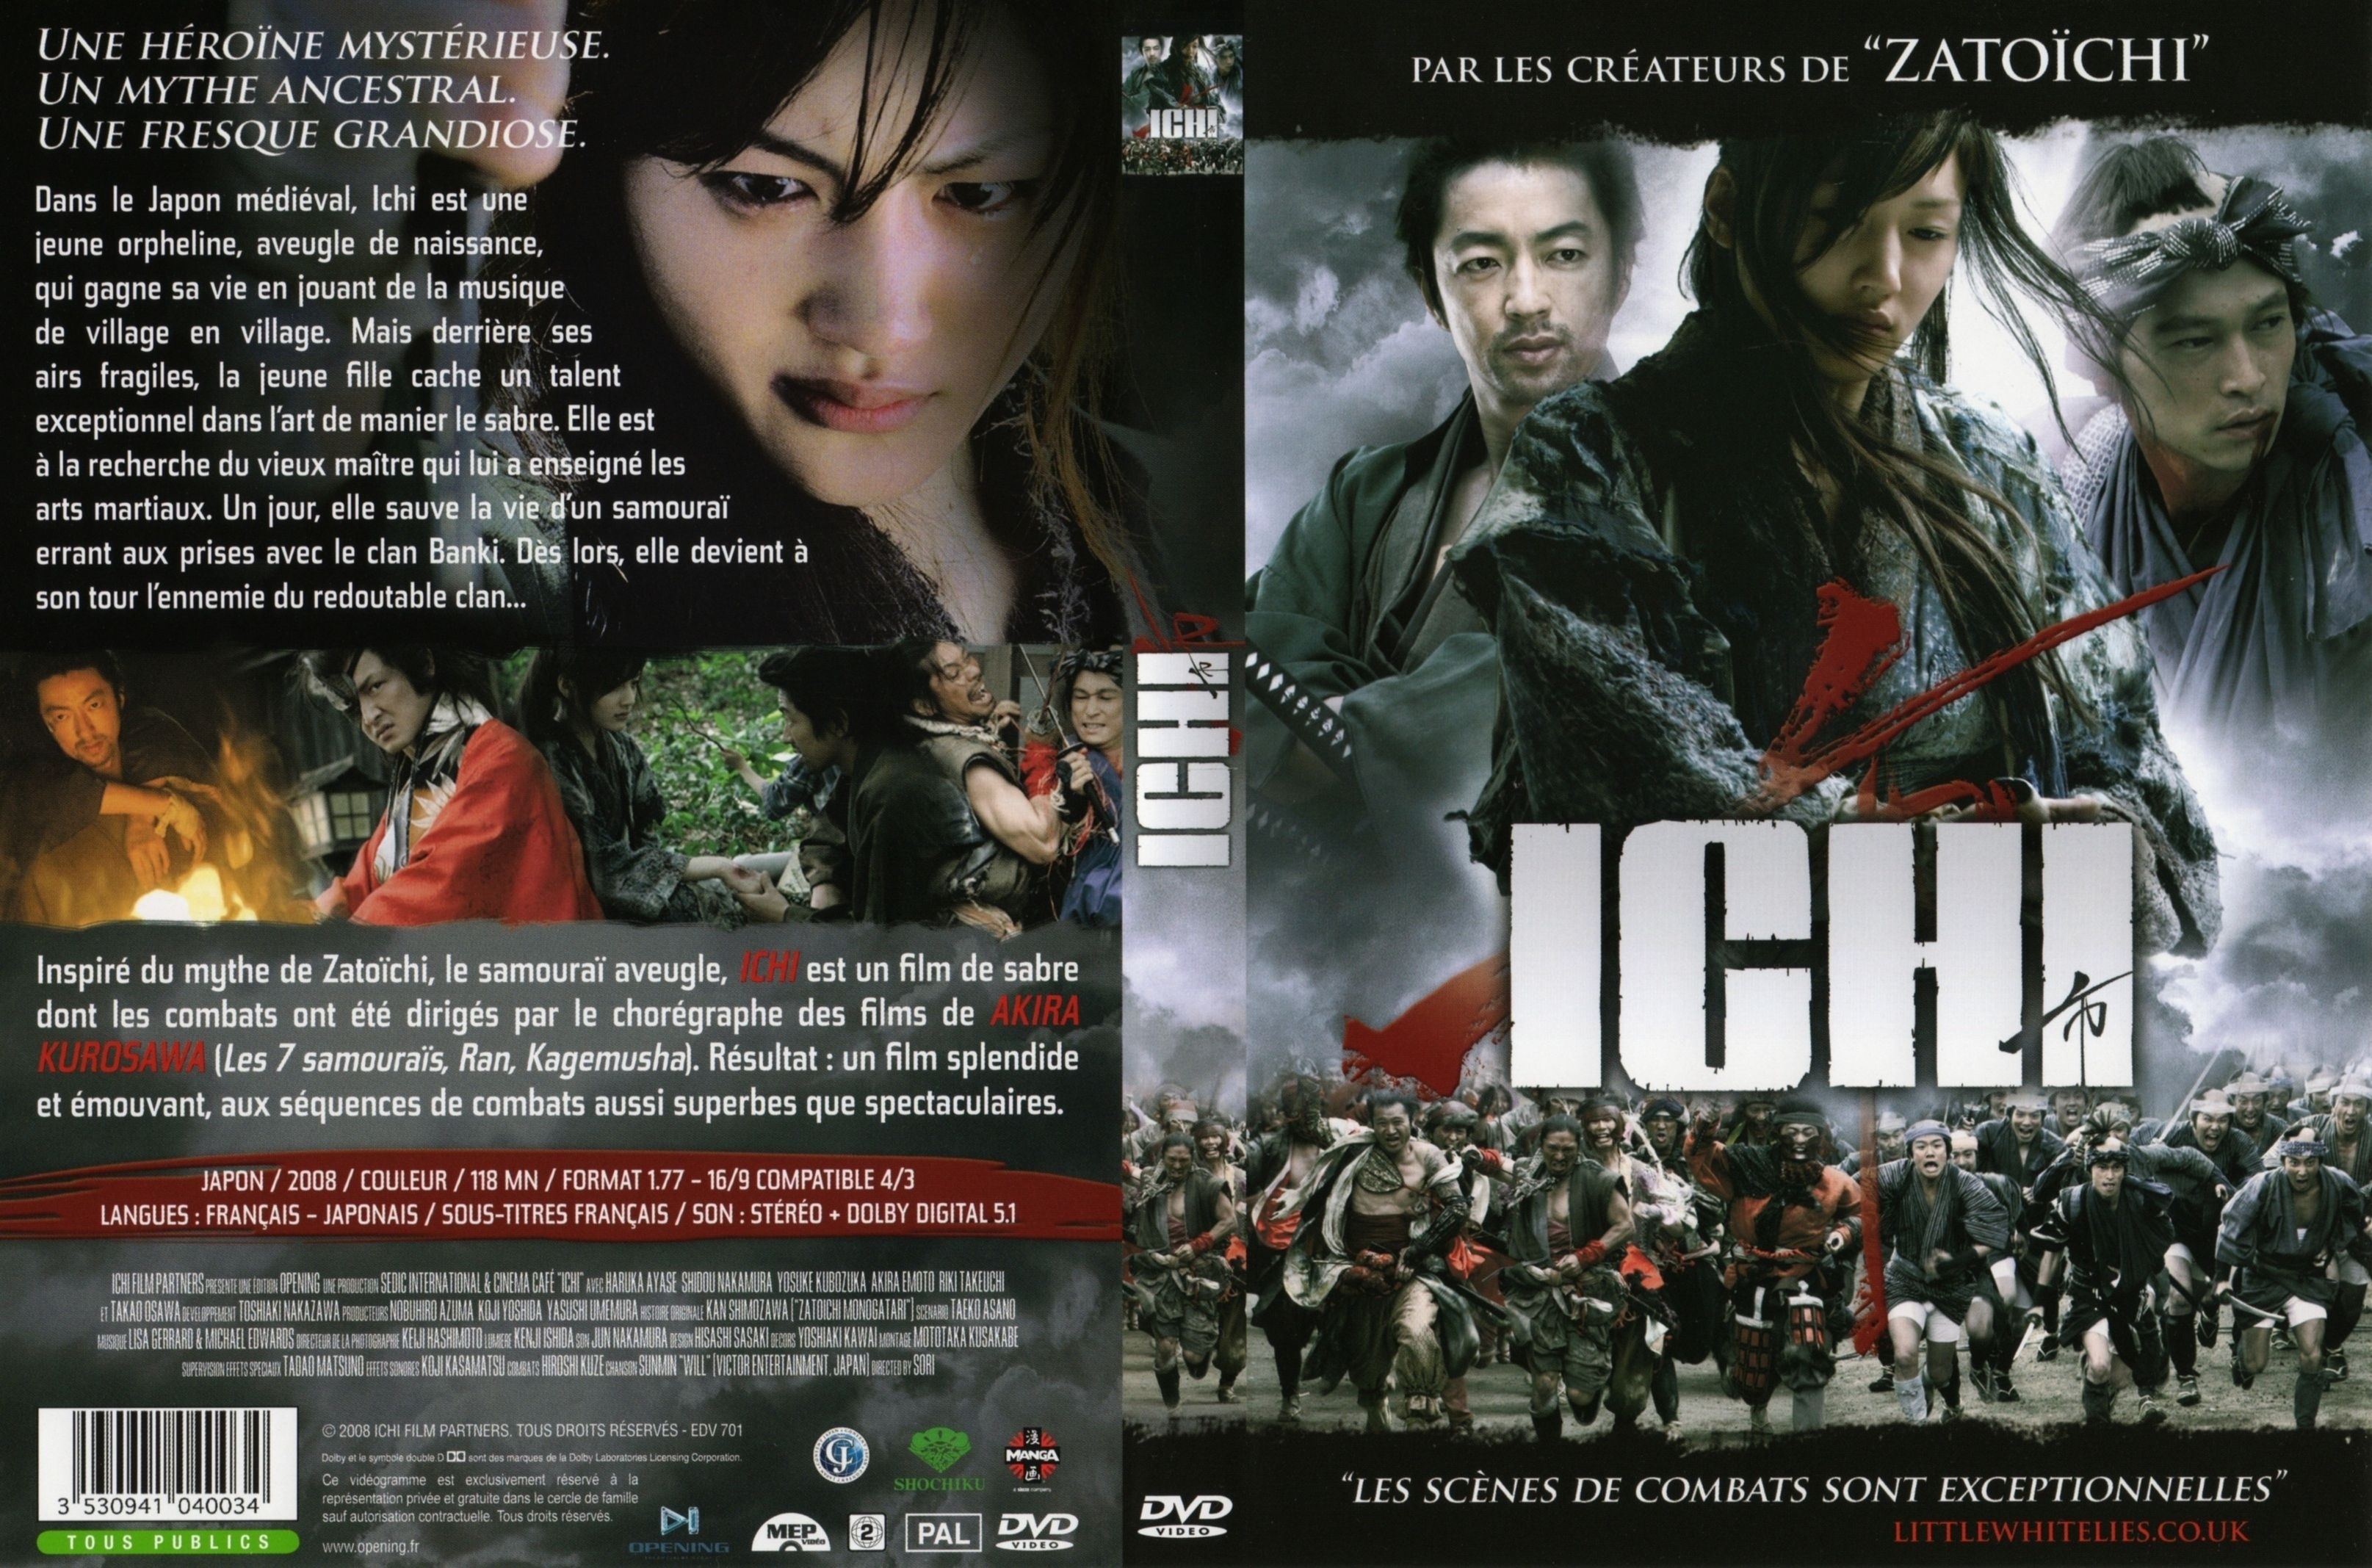 Jaquette DVD Ichi